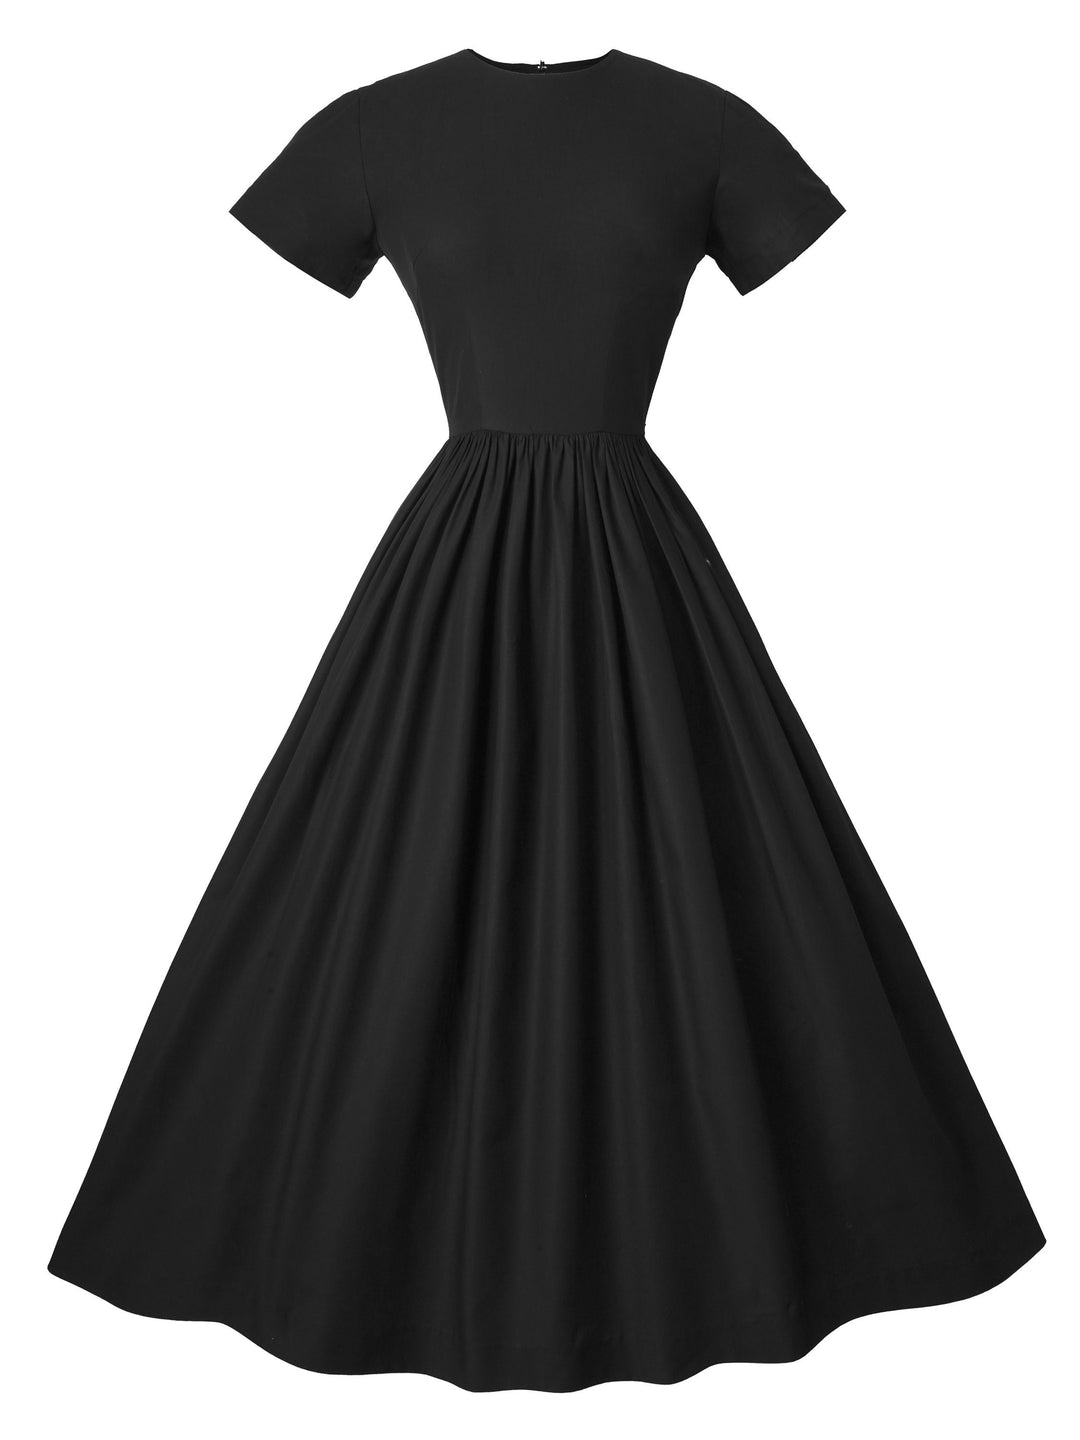 MTO - Dorothy Dress in Raven Black Cotton